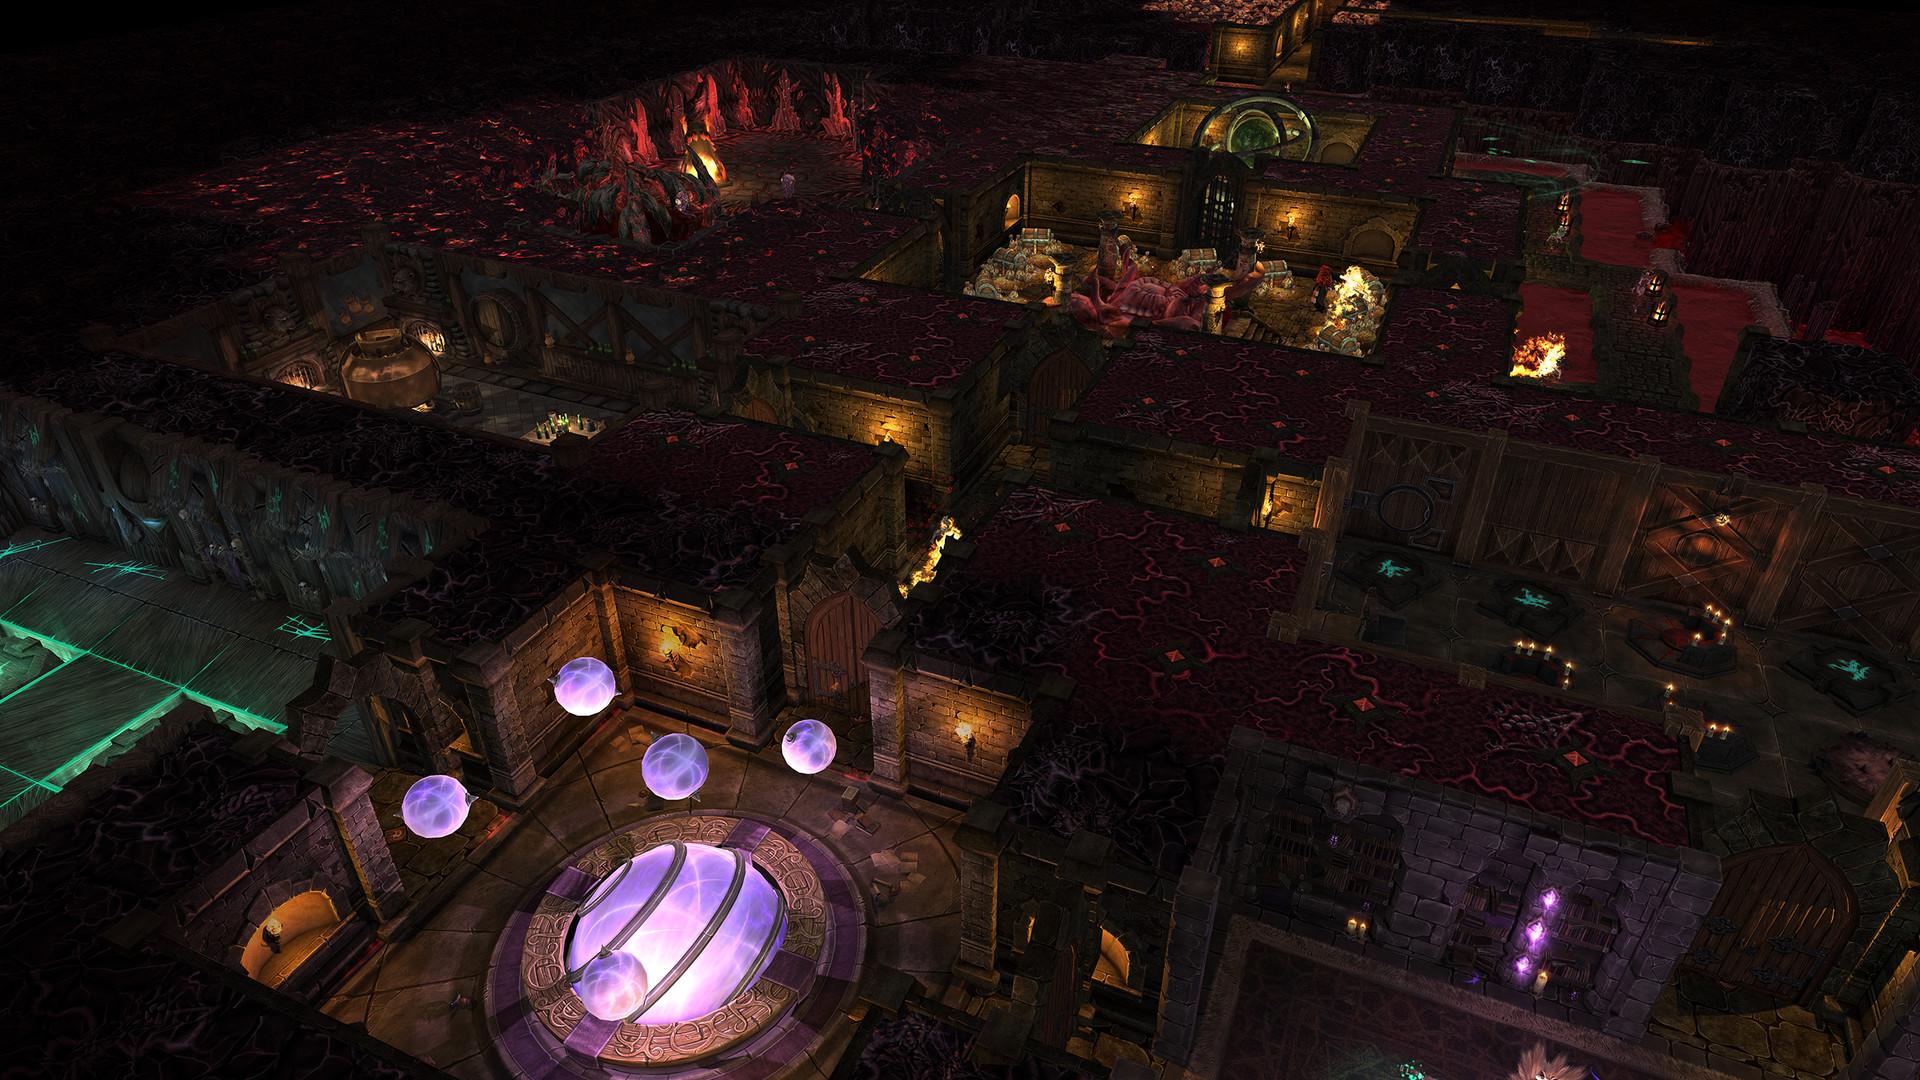 Screenshot №1 from game War for the Overworld